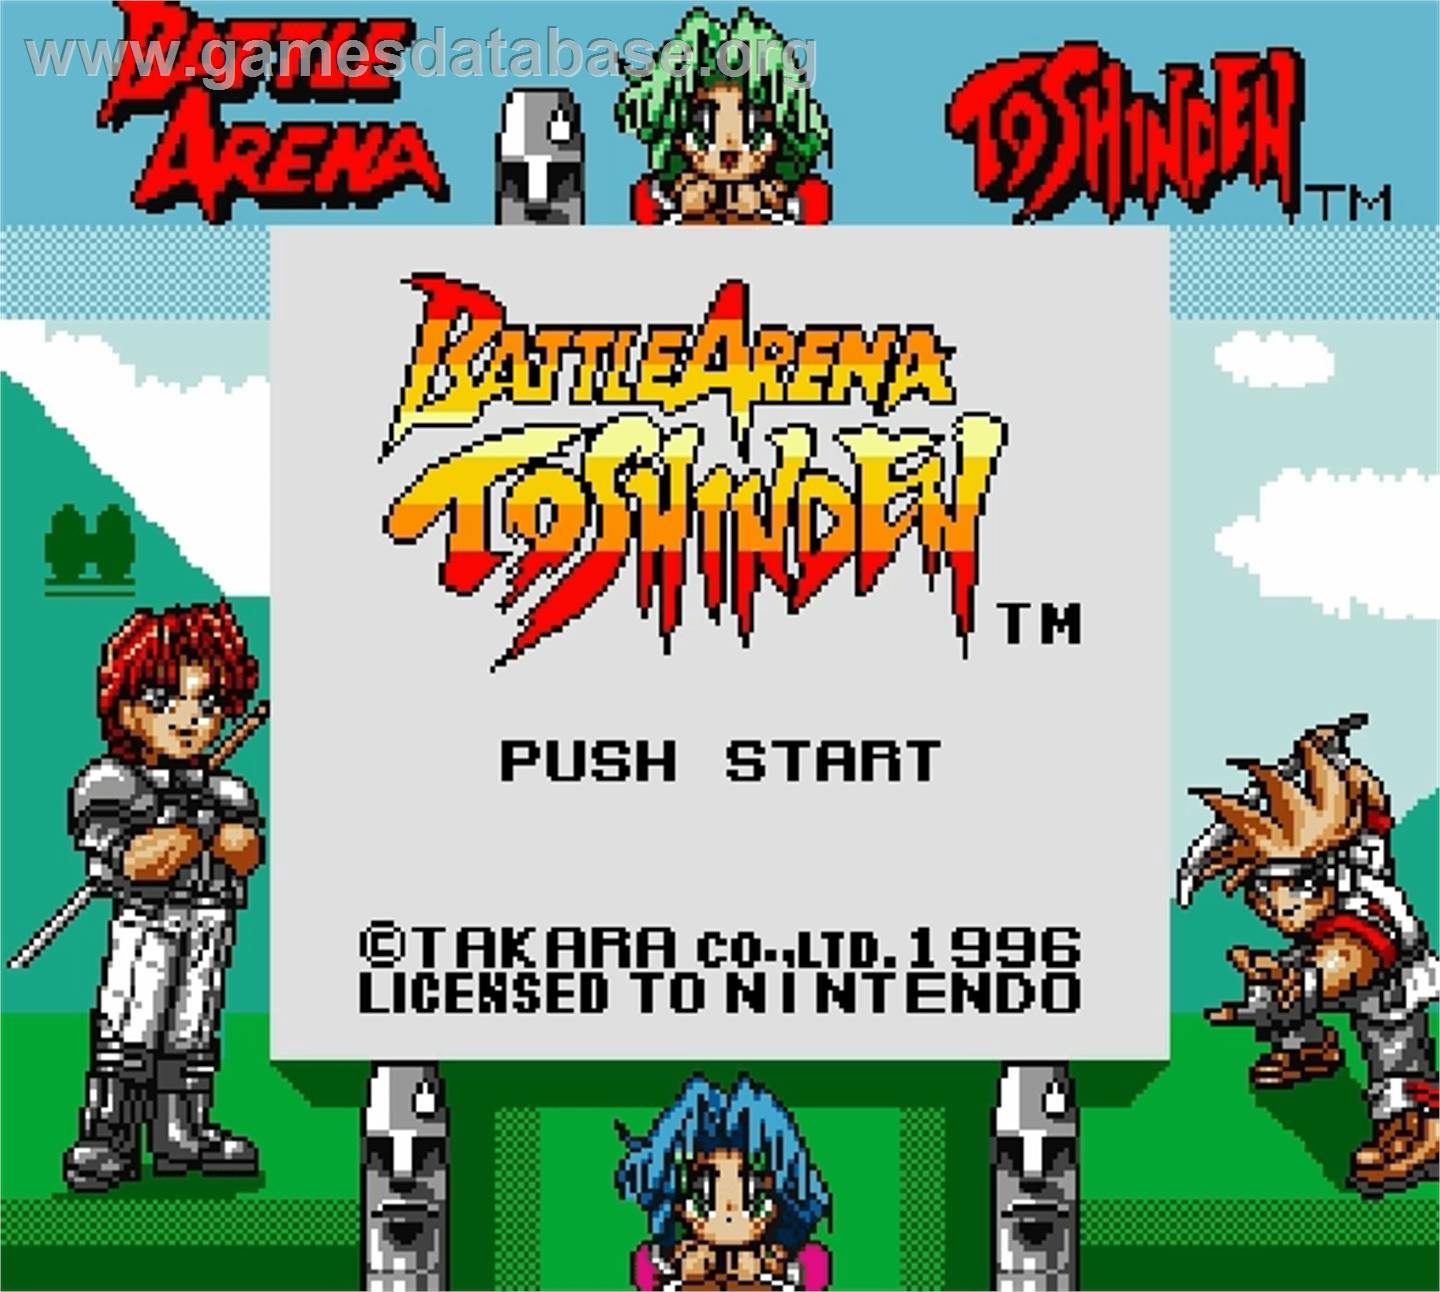 Battle Arena Toshinden - Nintendo Super Gameboy - Artwork - Title Screen